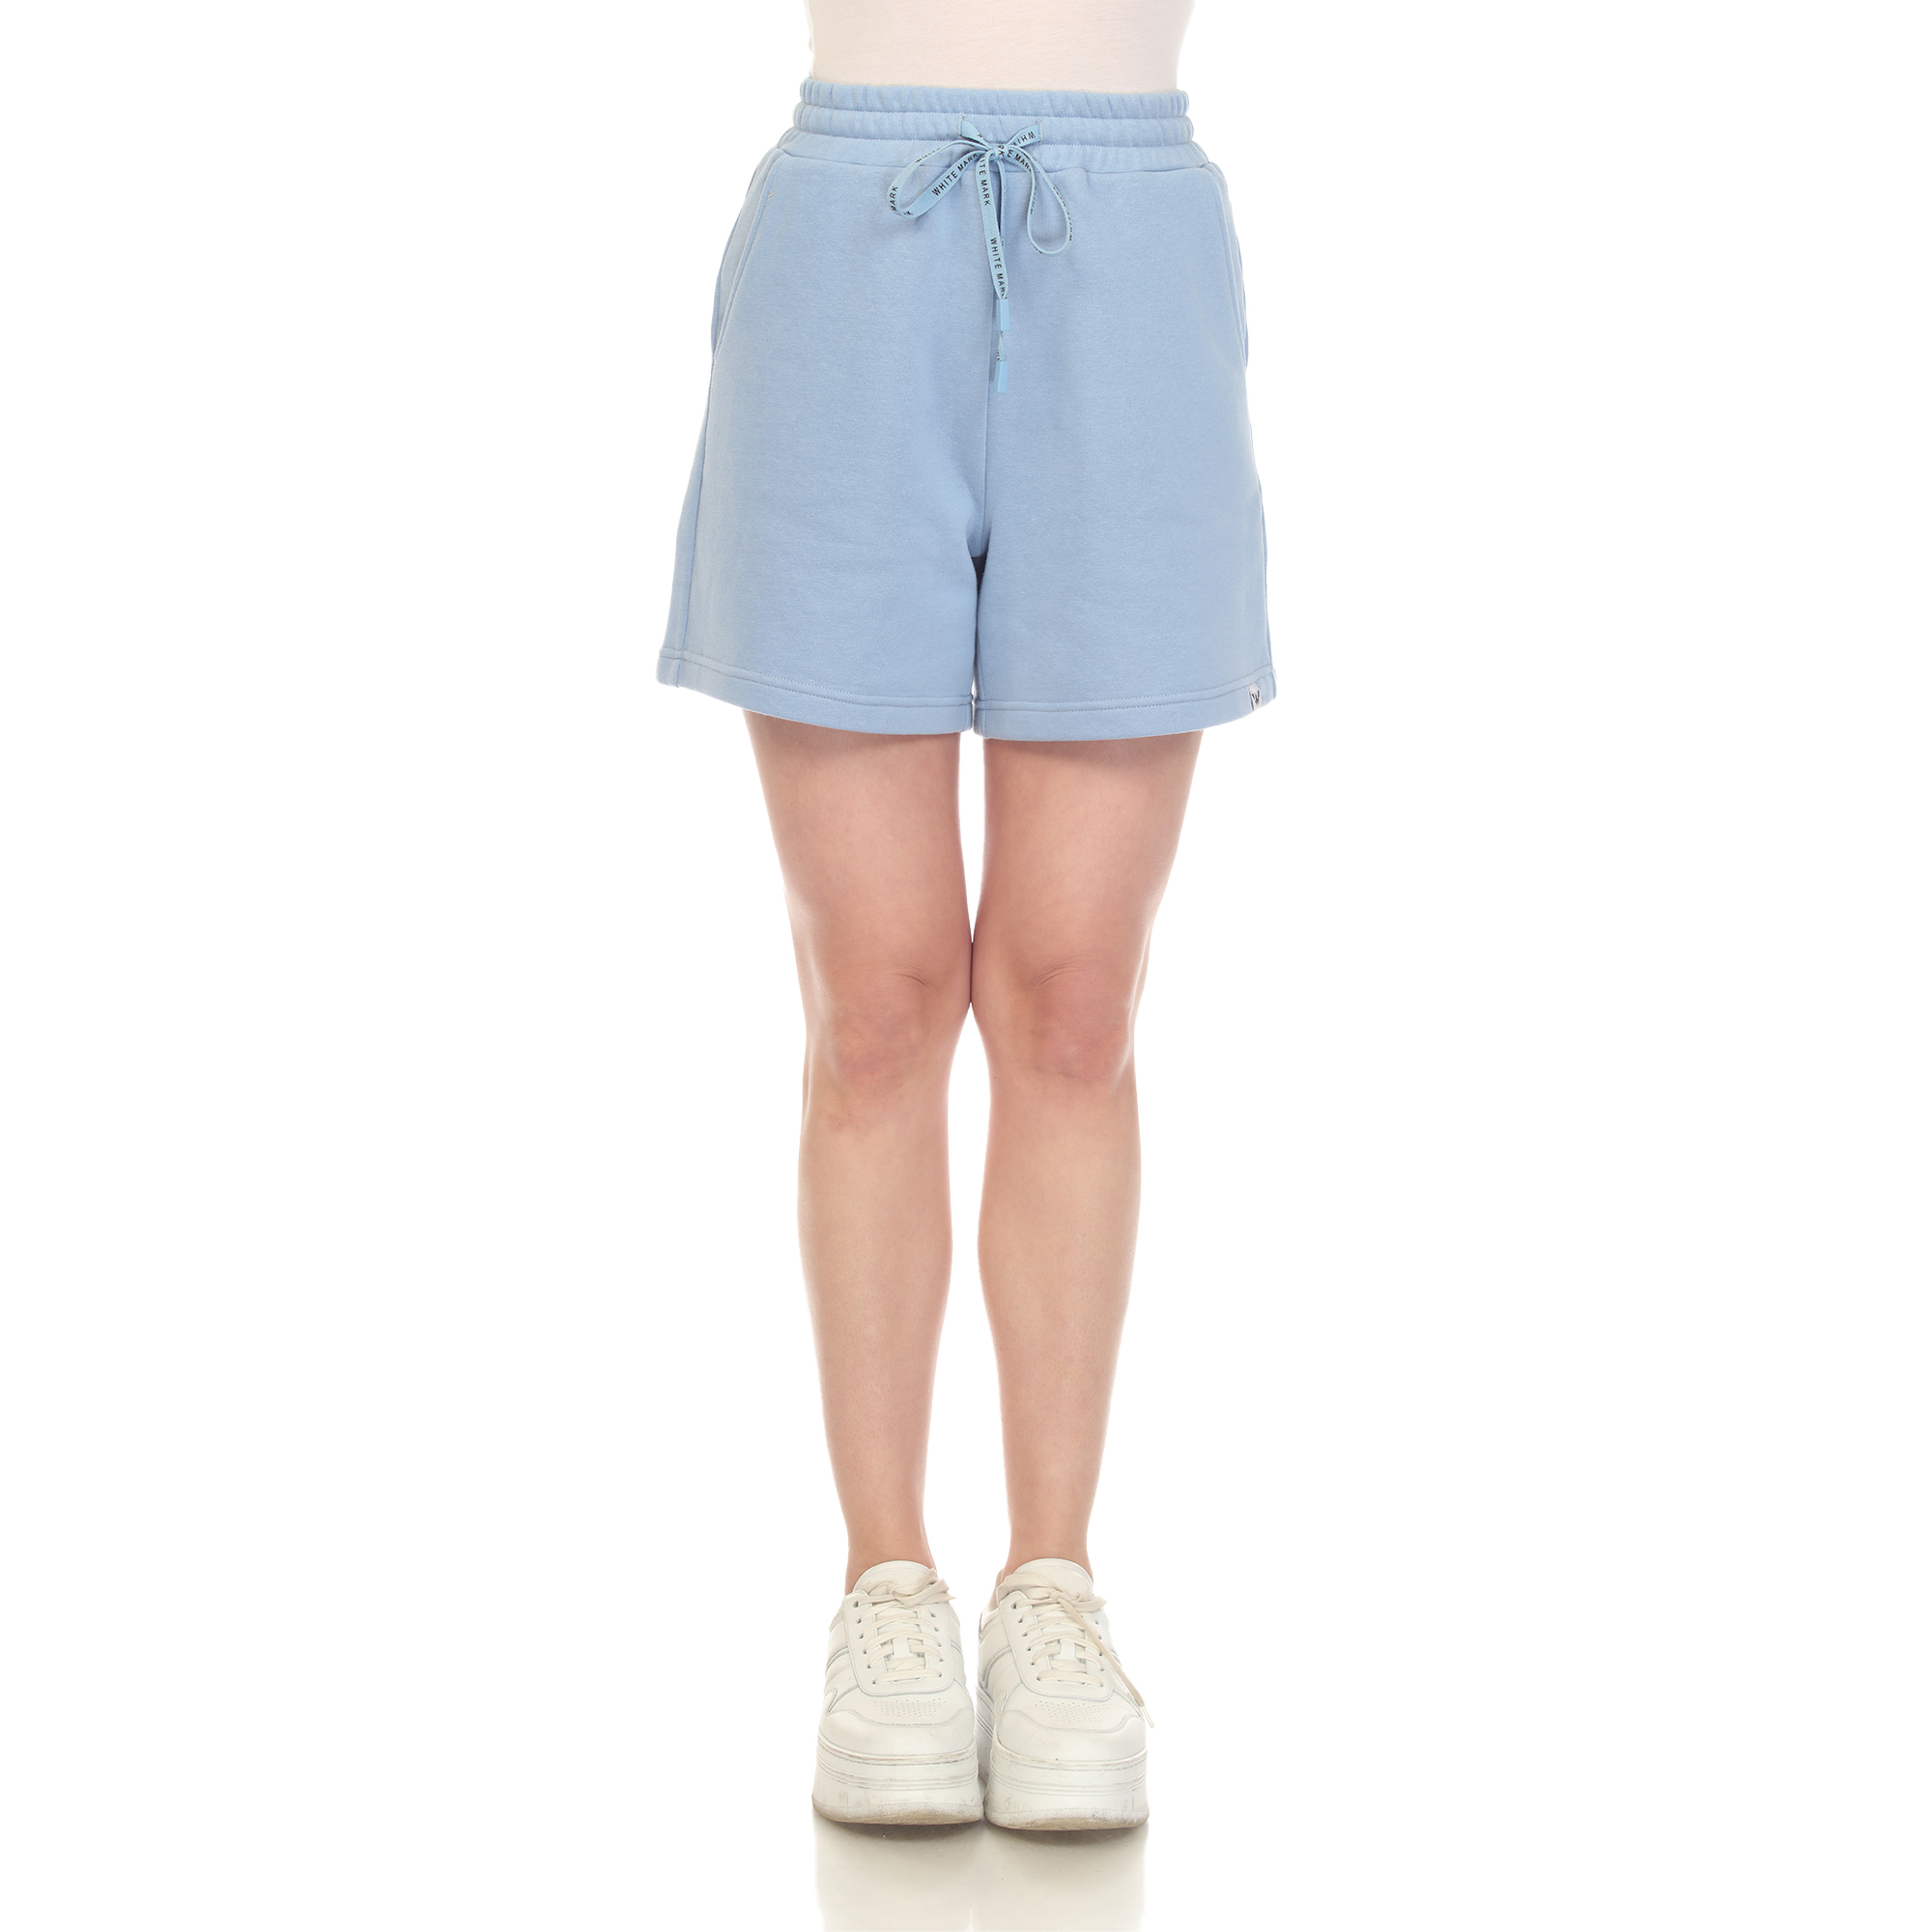 White Mark Women's Super Soft Drawstring Waistband Sweat Shorts - Denim Blue, Small